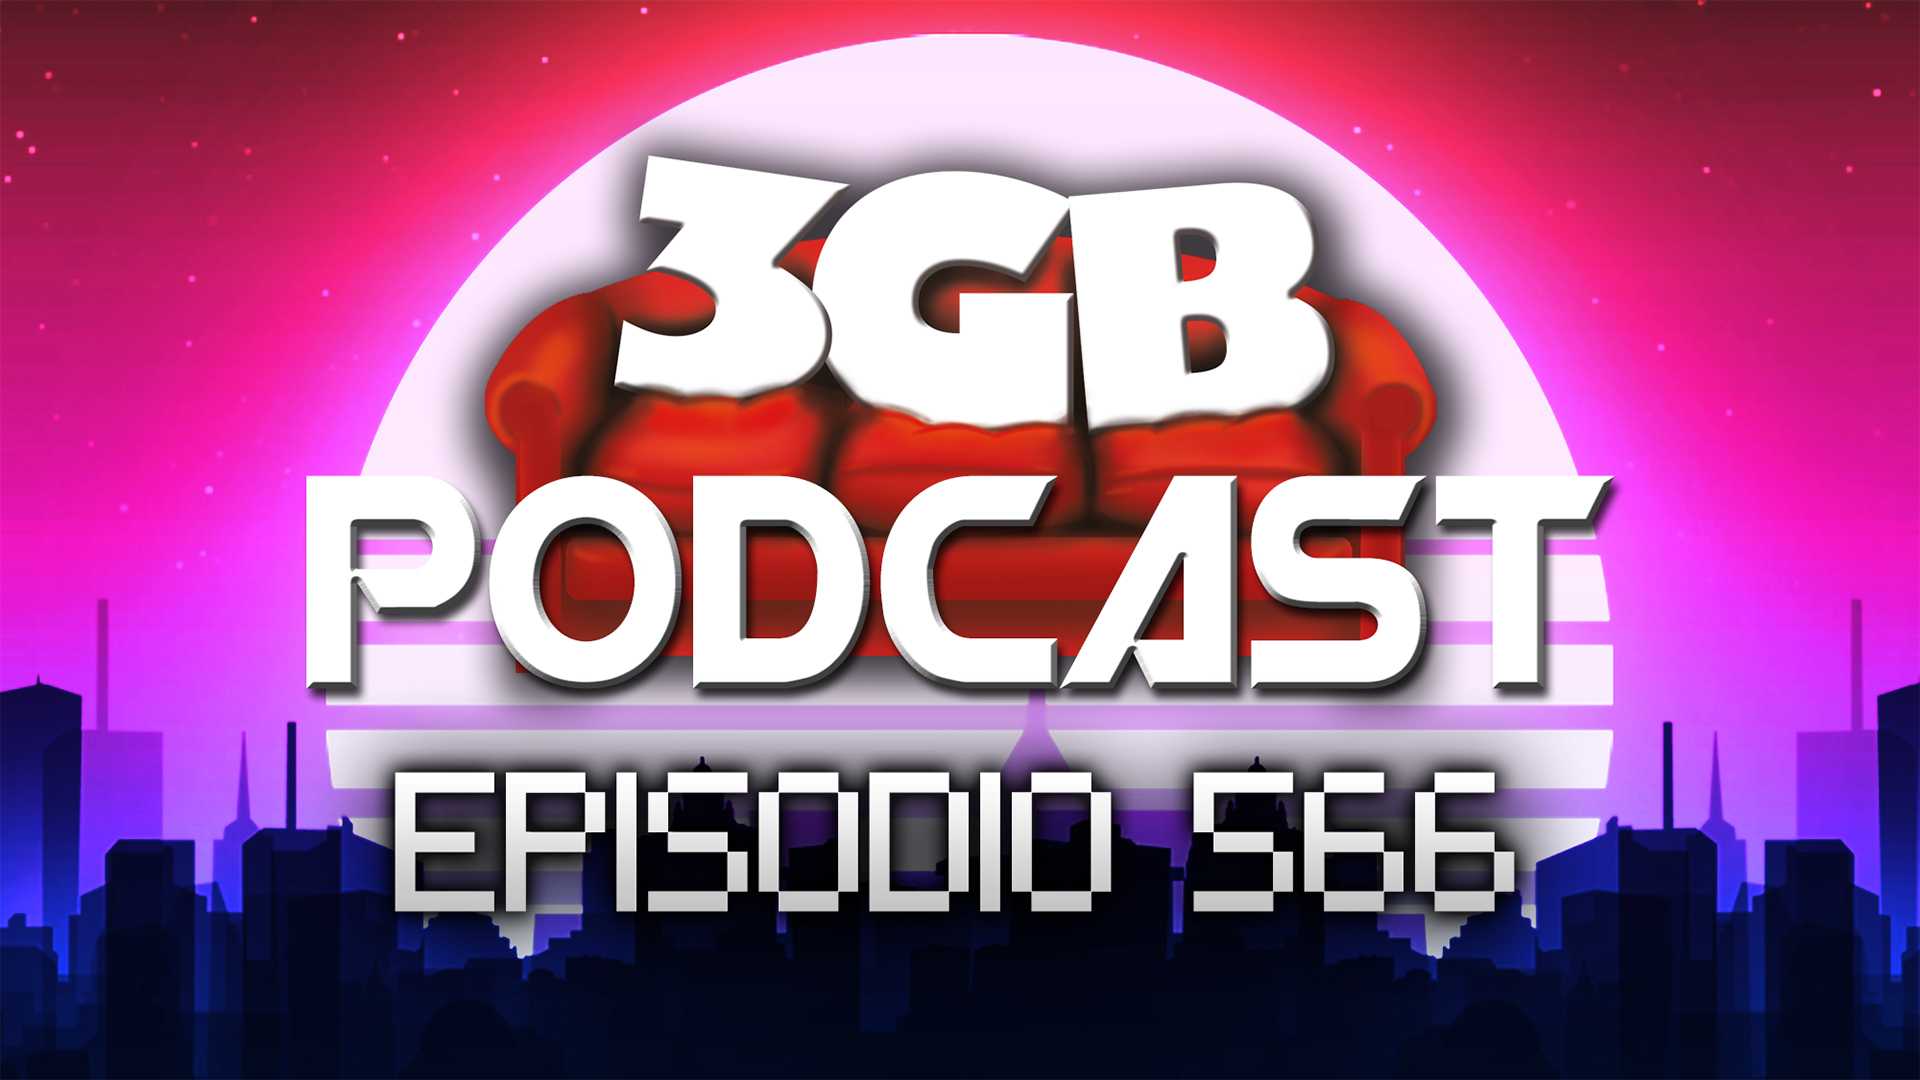 Podcast: Episodio 566, Metaphor: ReFantazio